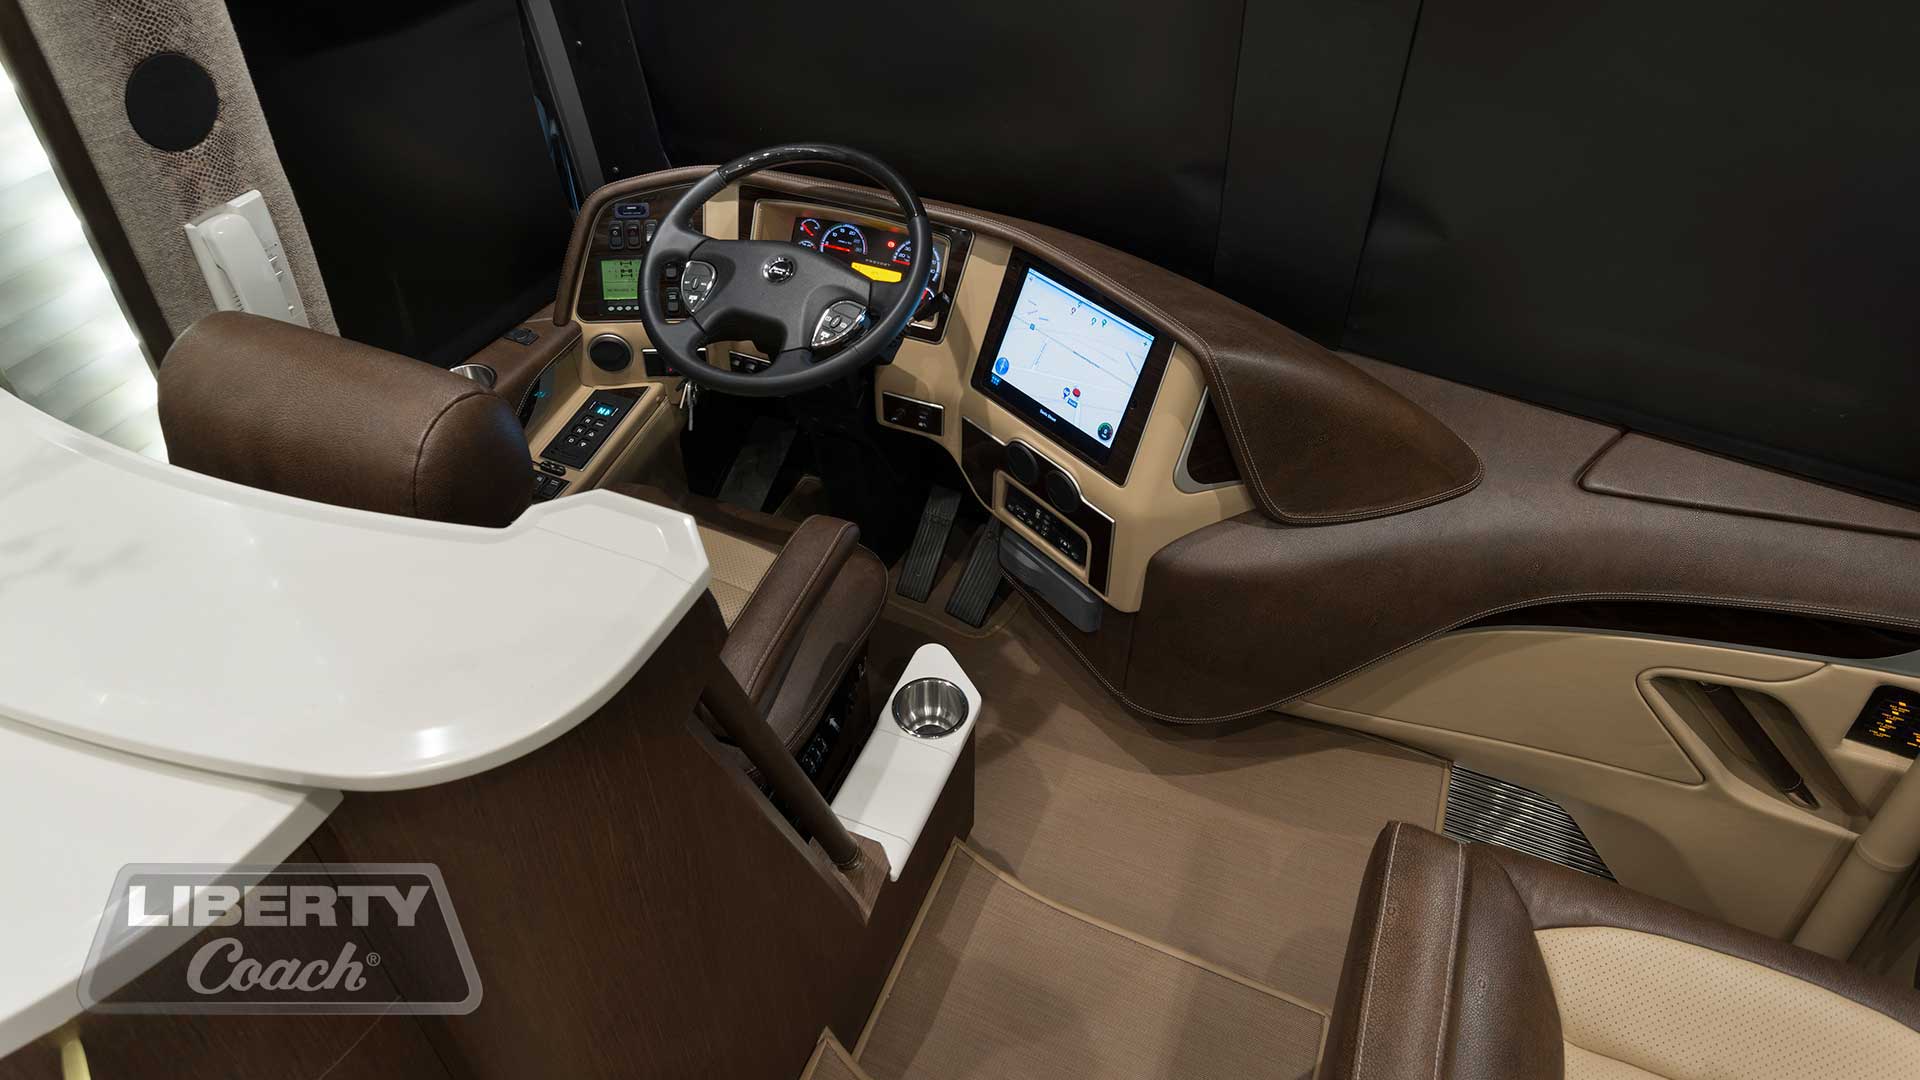 Liberty-Coach-5420-Cockpit-Gallery.jpg